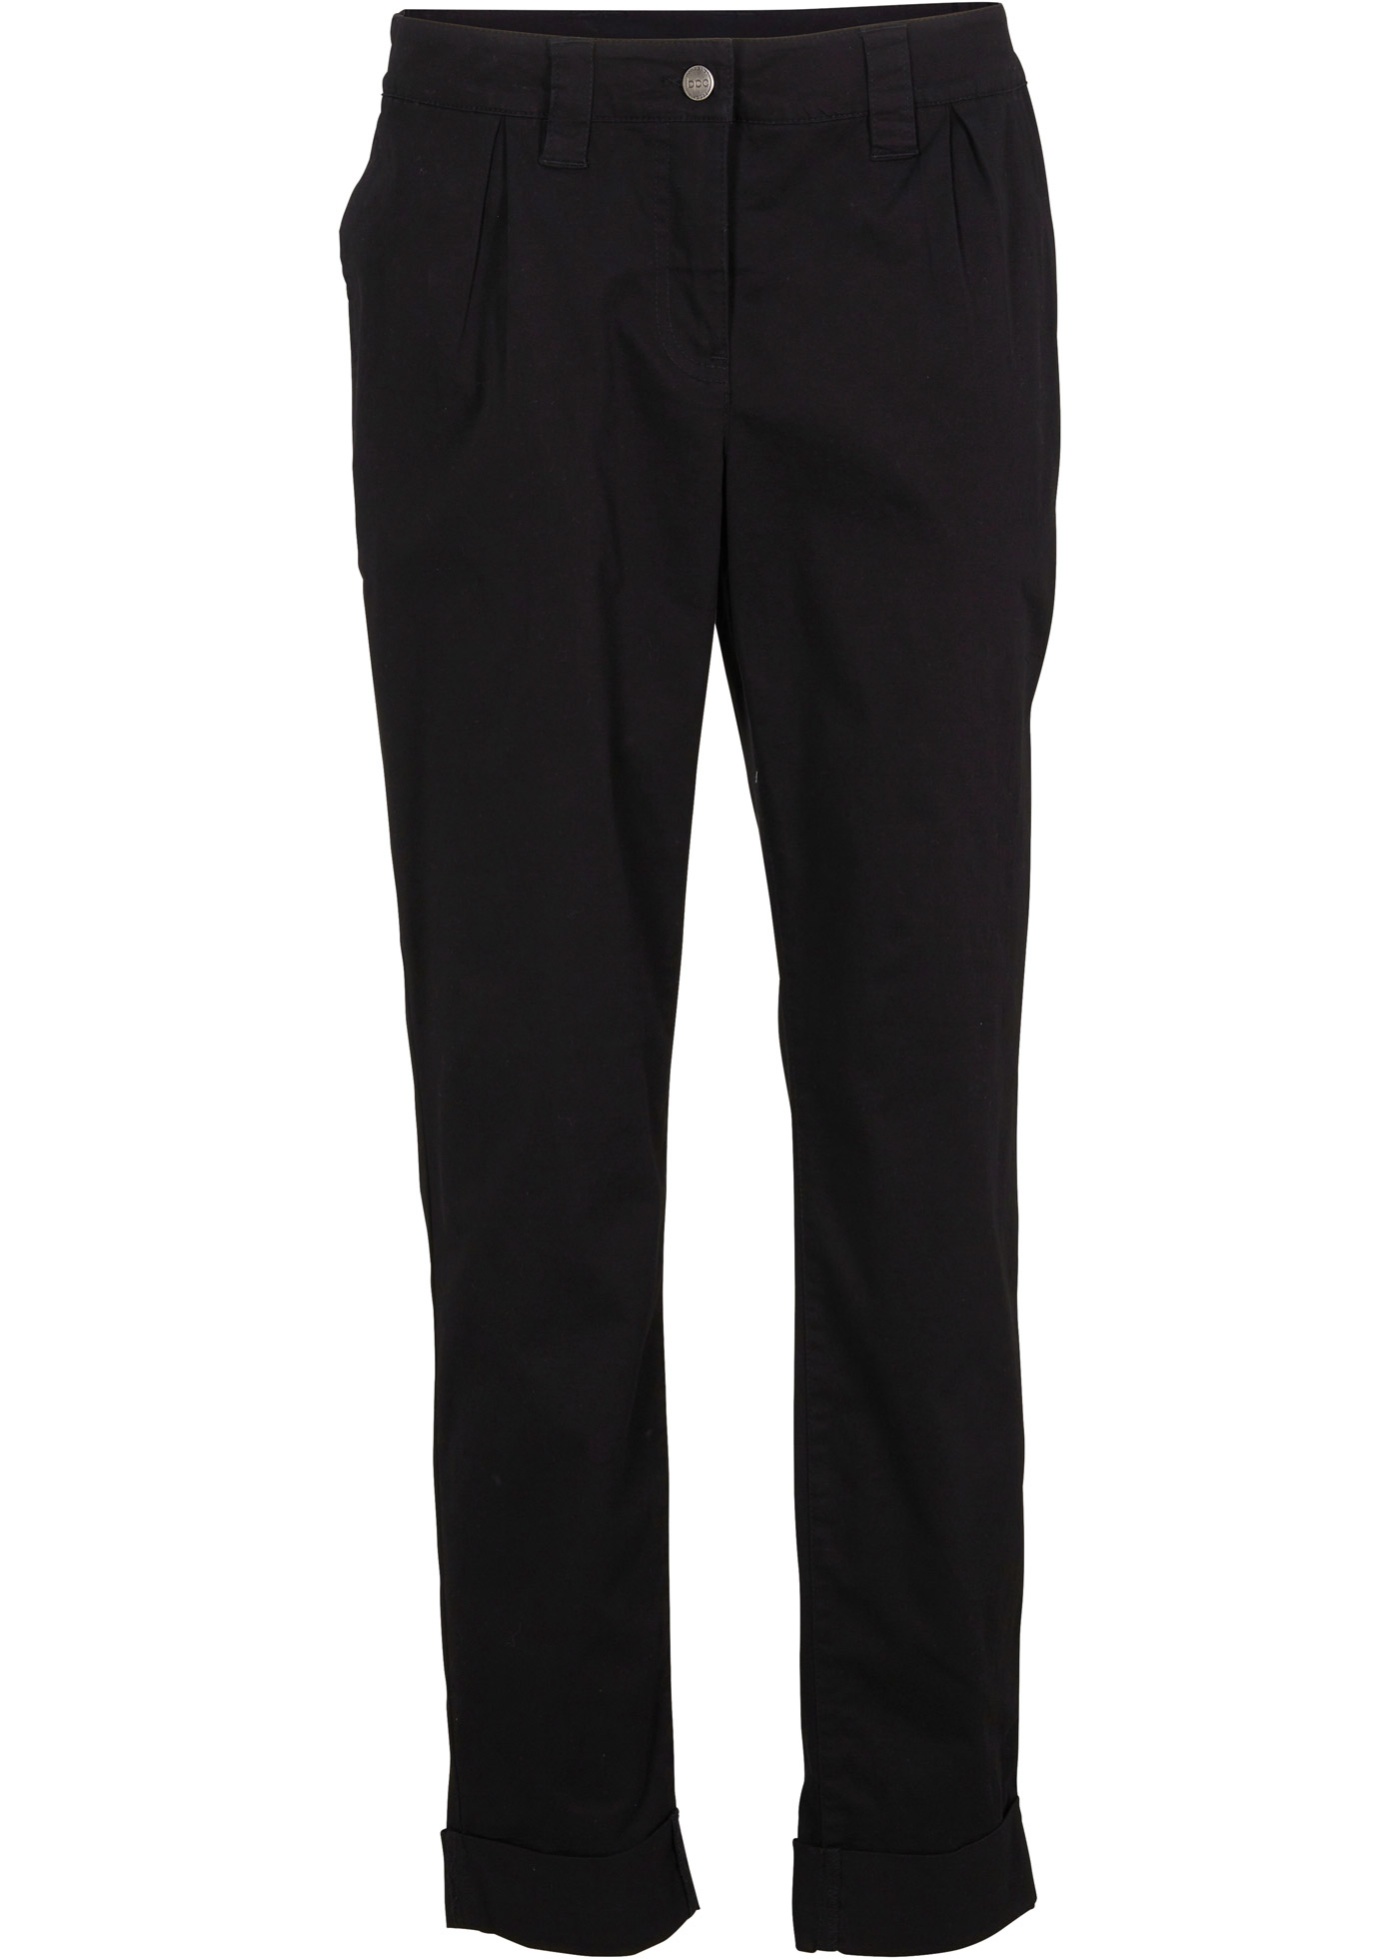 Pantaloni chino con cinta comoda e risvolto (Nero) - bpc bonprix collection